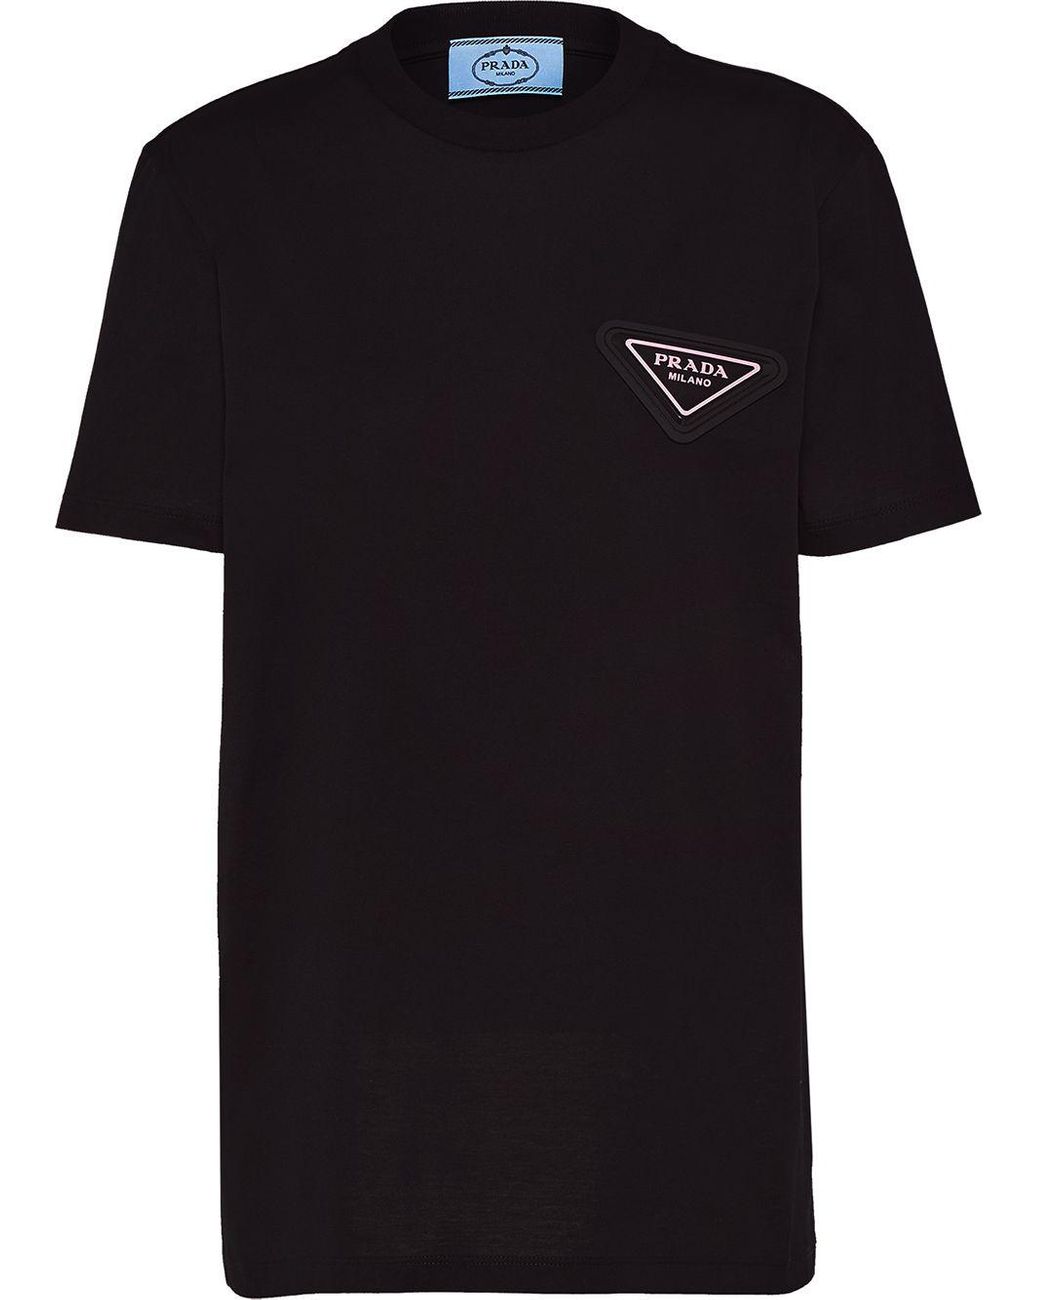 Prada Cotton Triangle-logo Jersey T-shirt in Black - Lyst